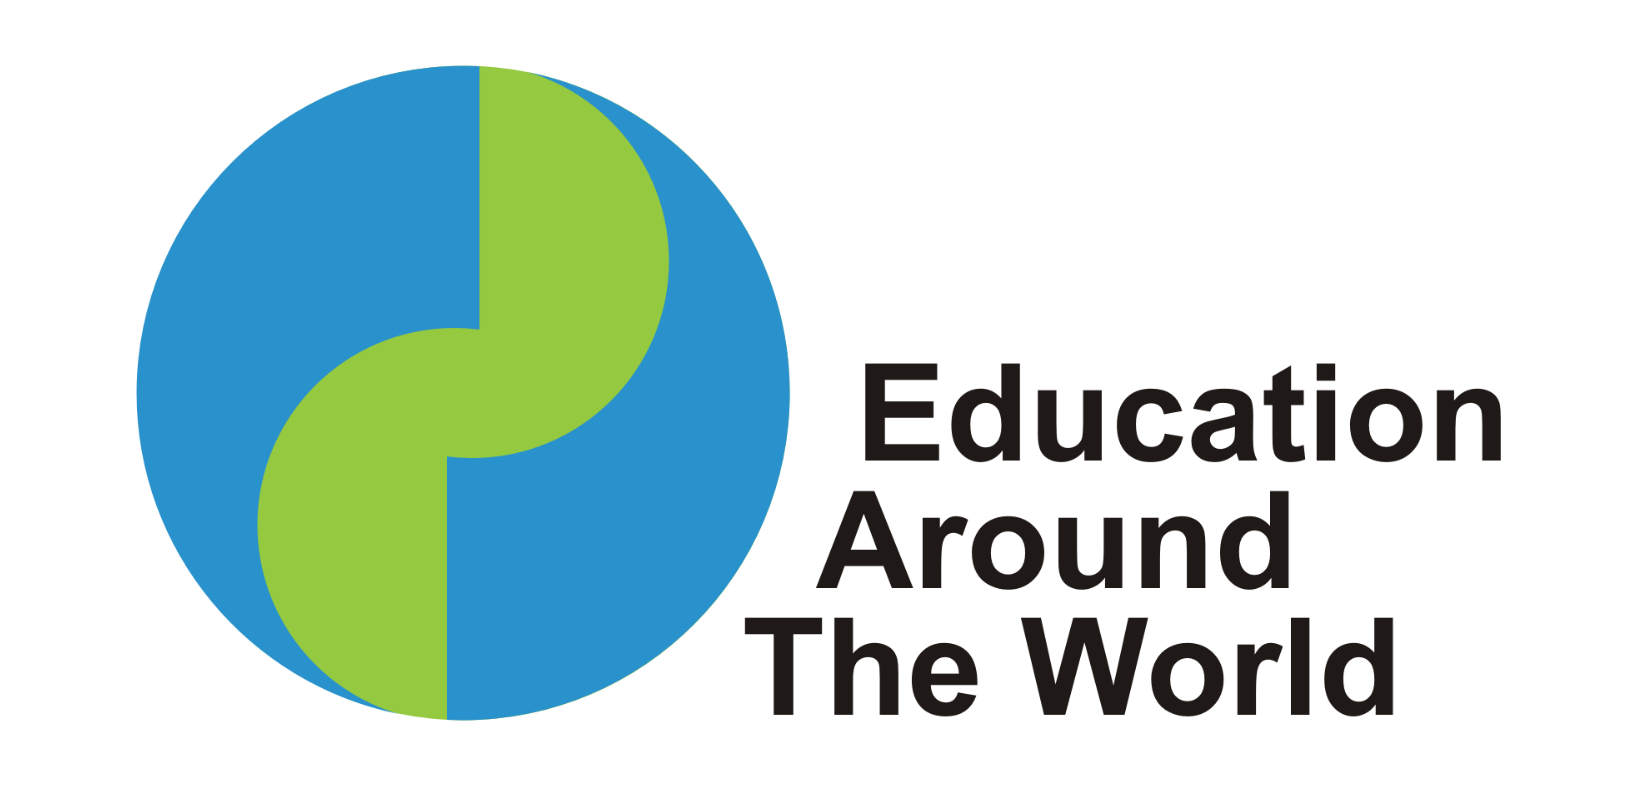 Education Around The World